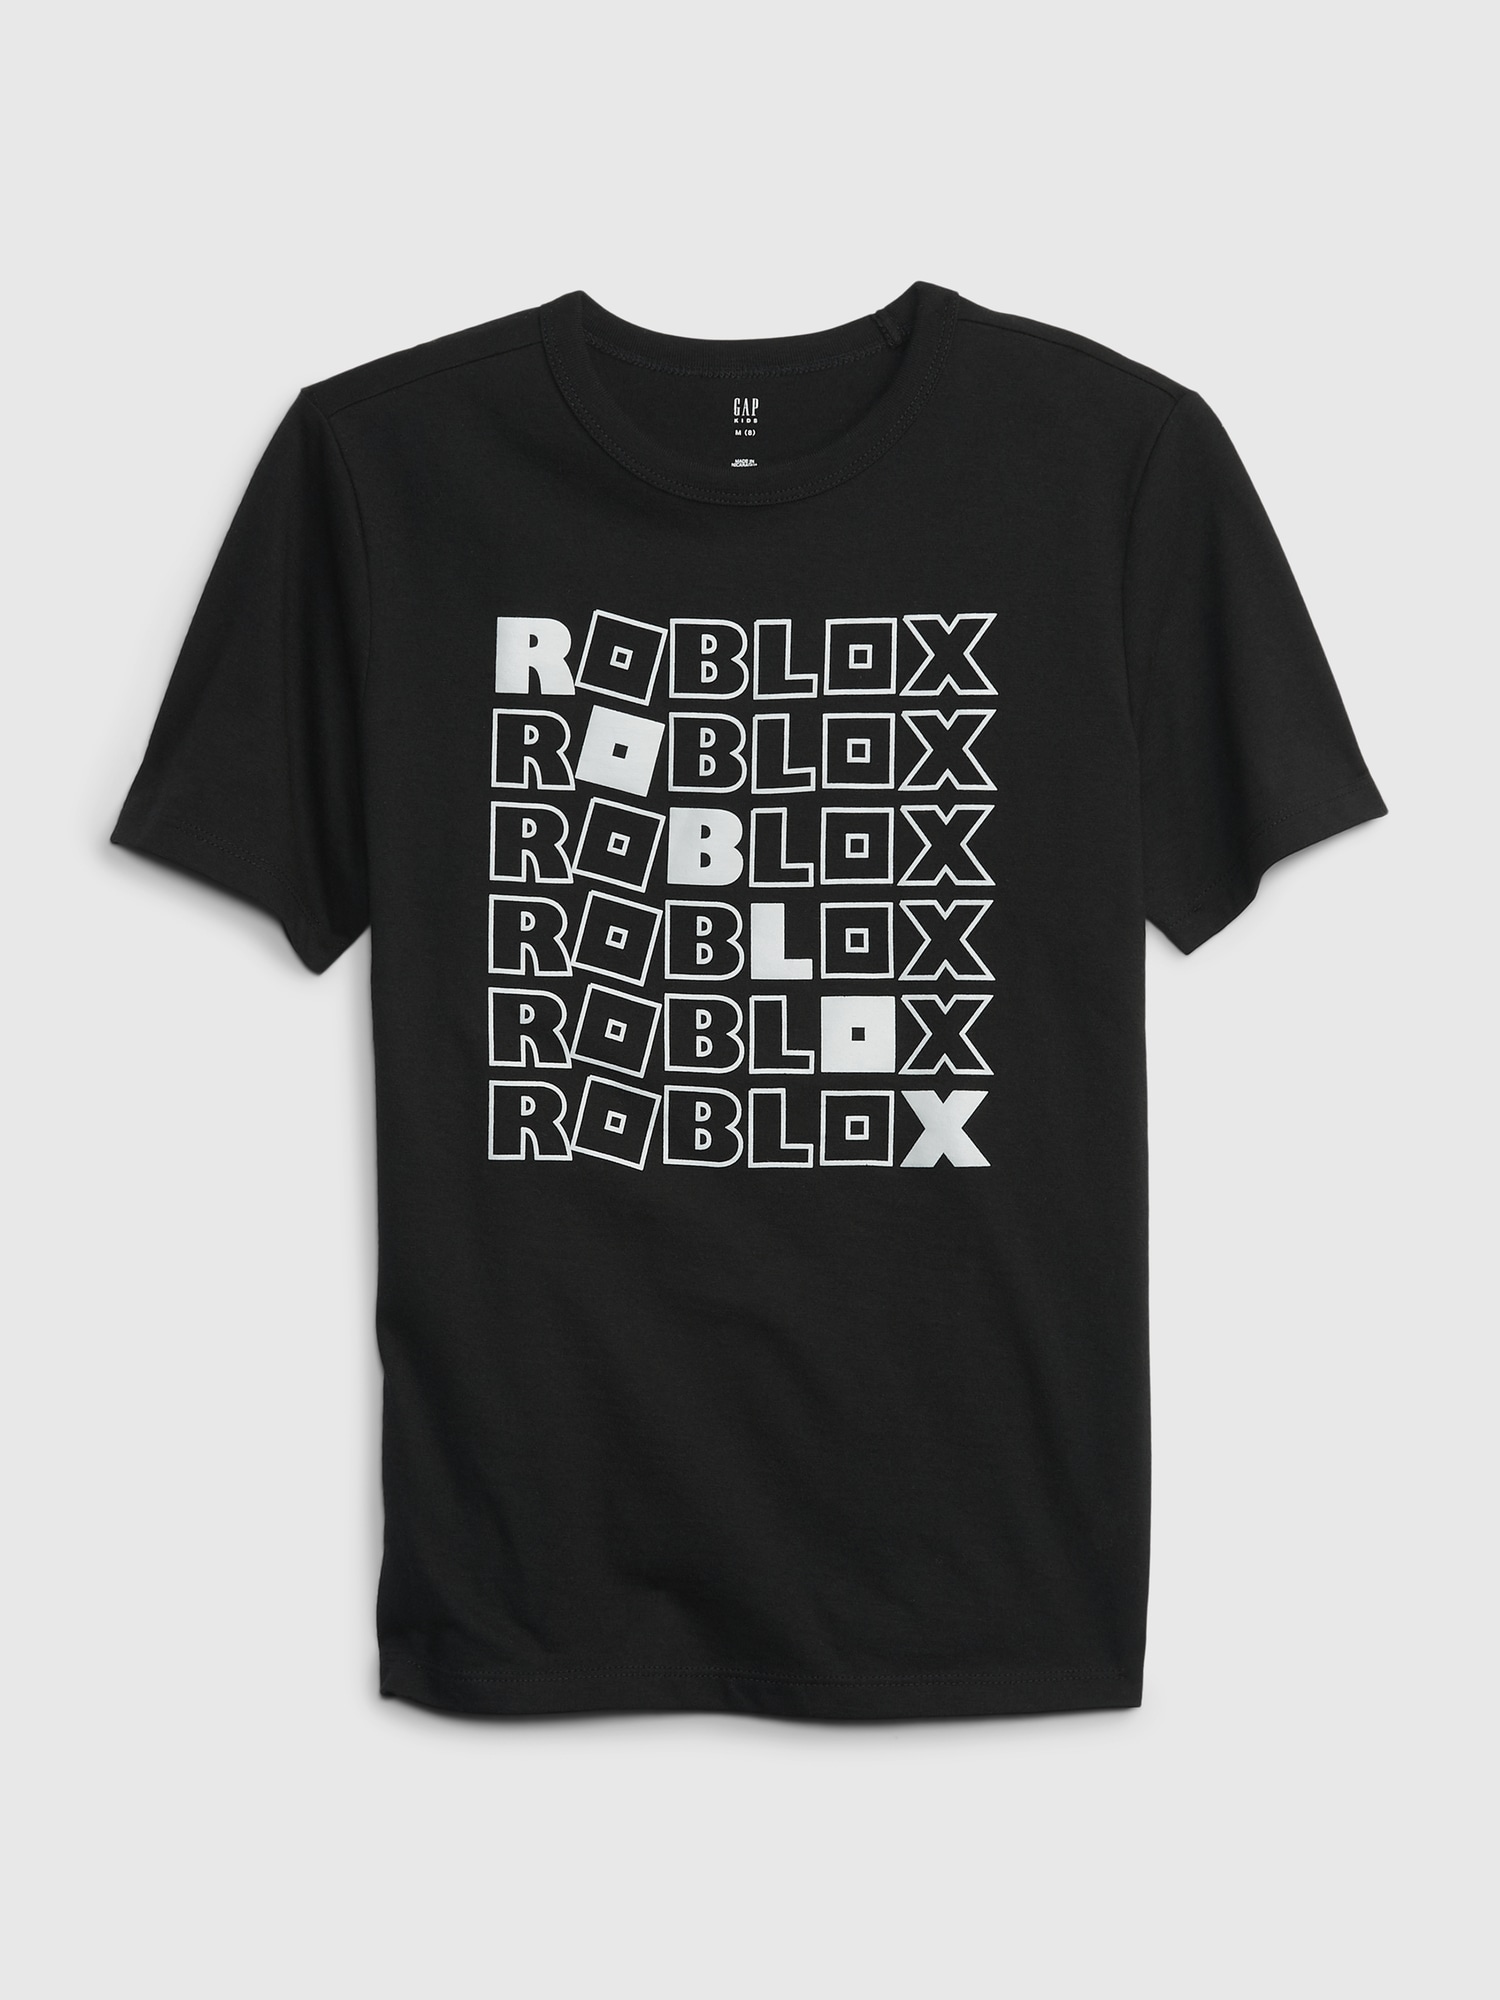 Roblox Youth Boys Black Tee Shirt New M